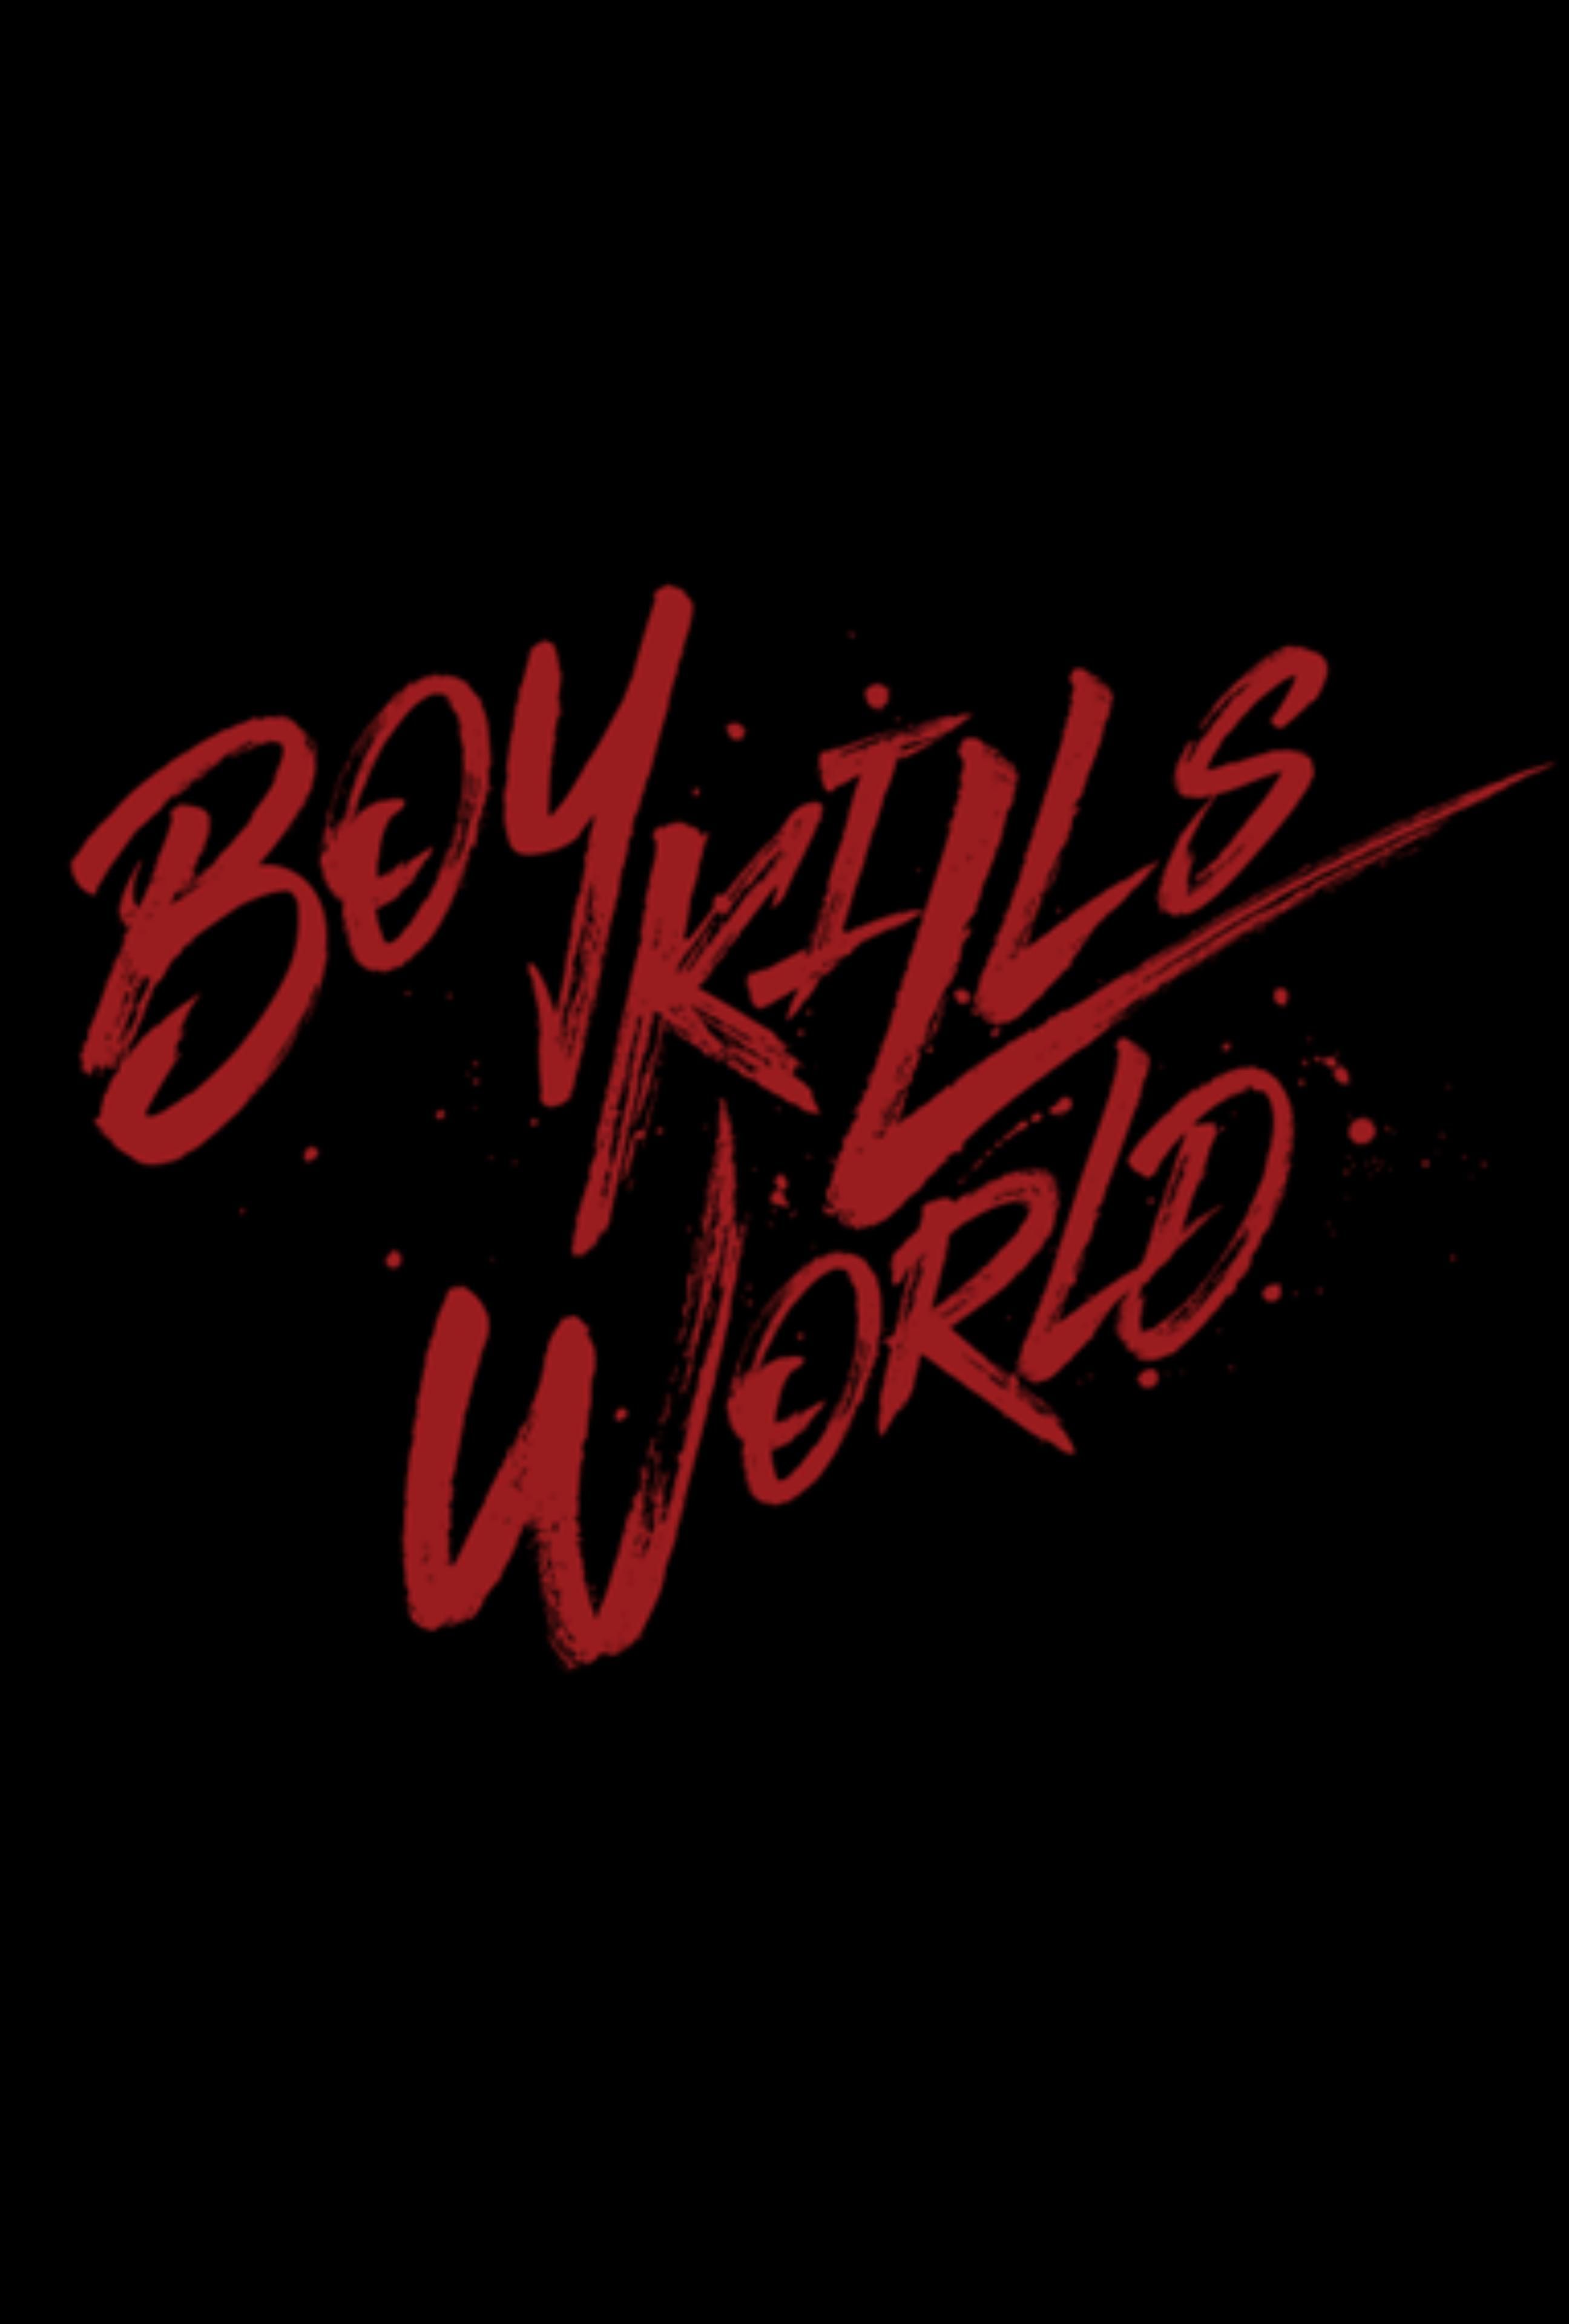 Bill Skarsgård’s Boy Kills World Blocked From Box Office Top 10 By 45-Year-Old Classic